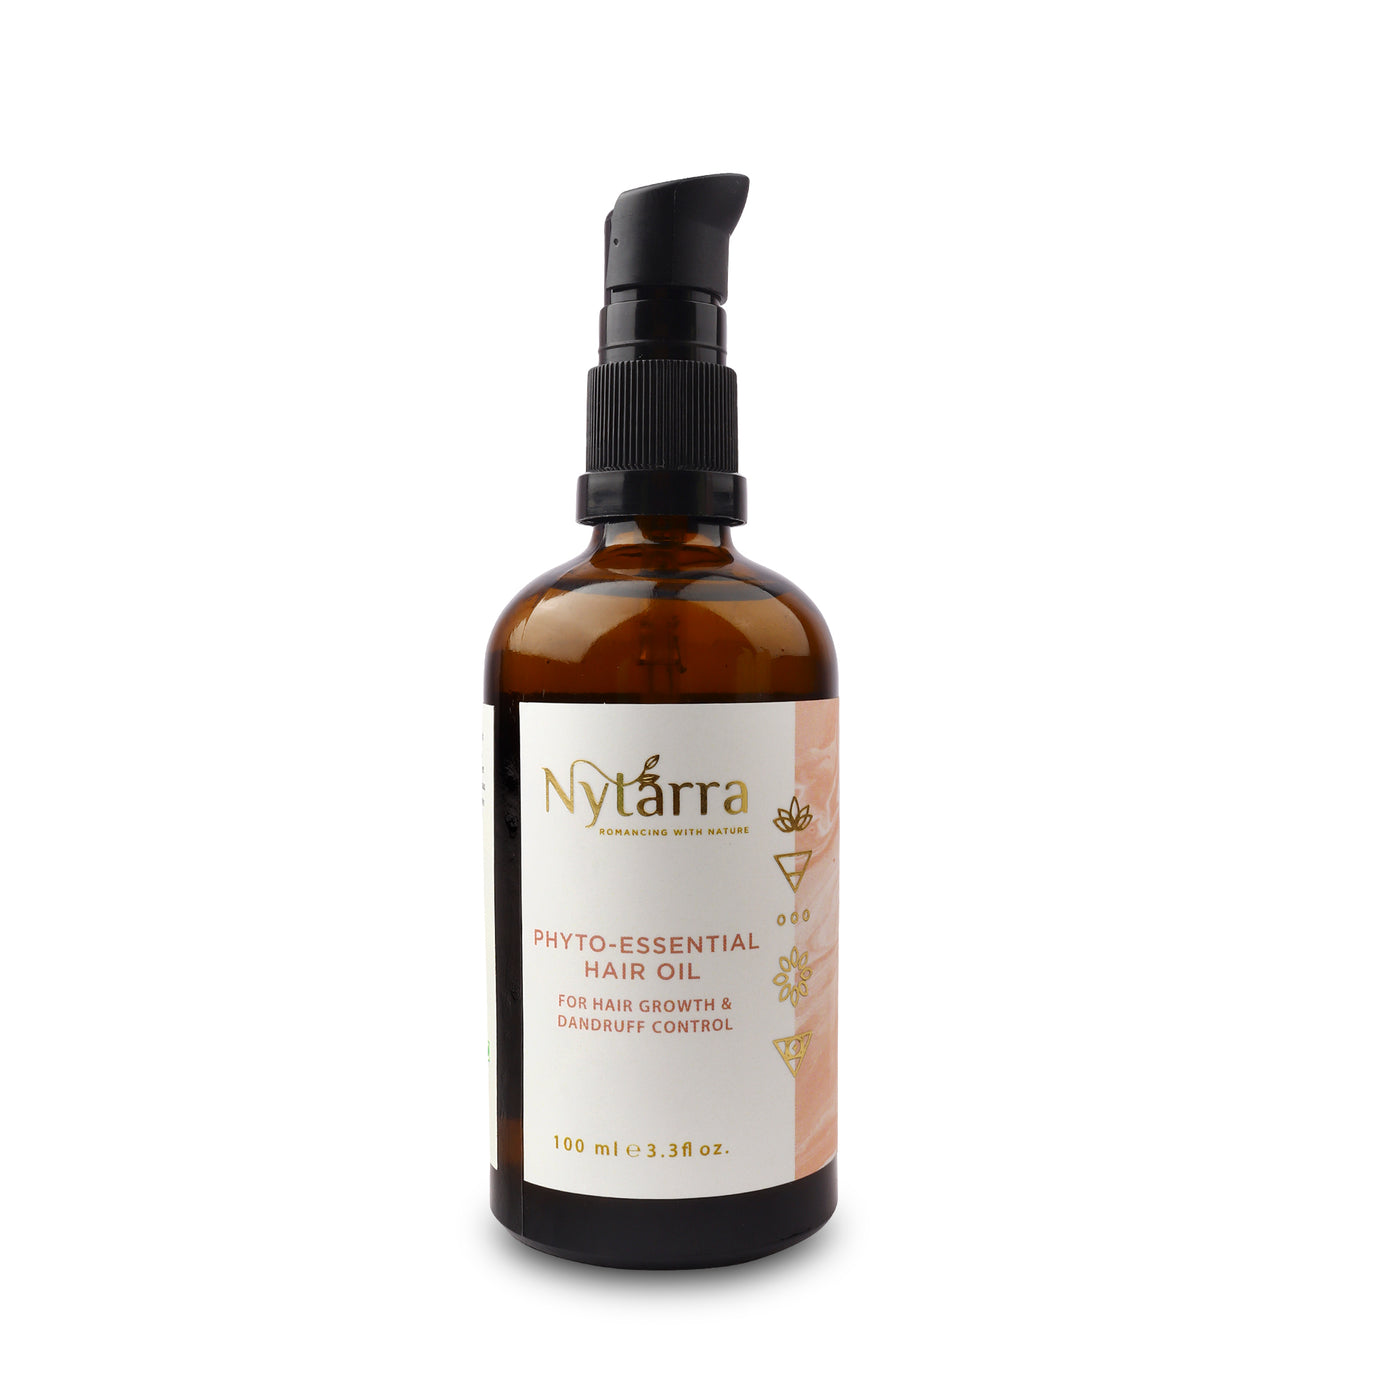 Phyto-Essential Hair Oil - 100 ml